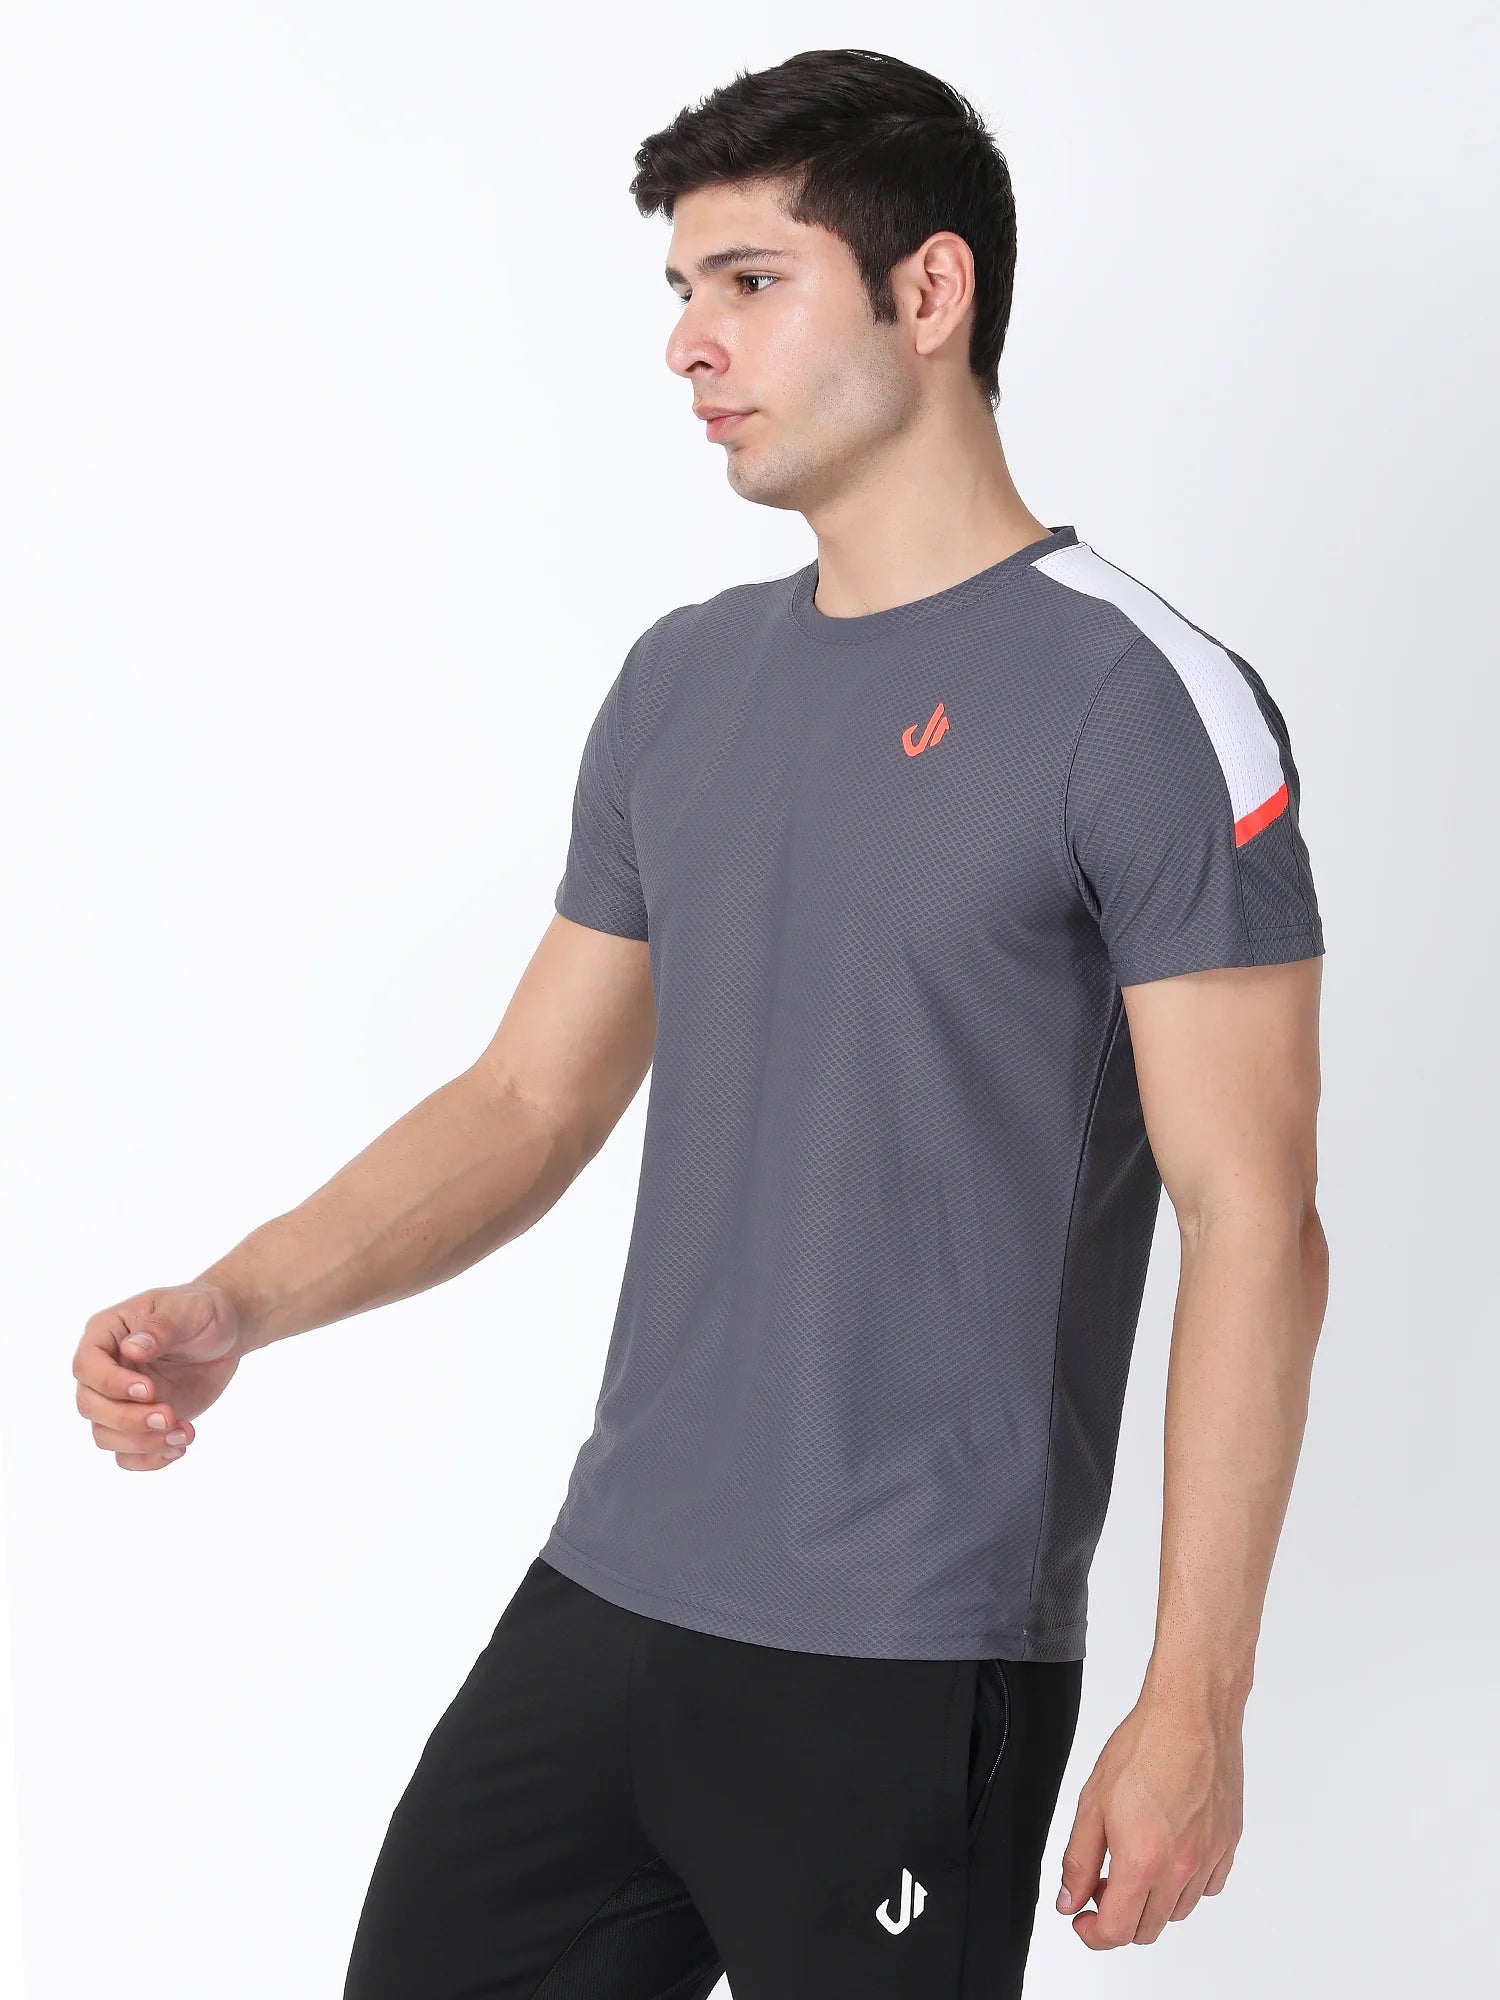 Jeffa Endurance T-shirt in Grey